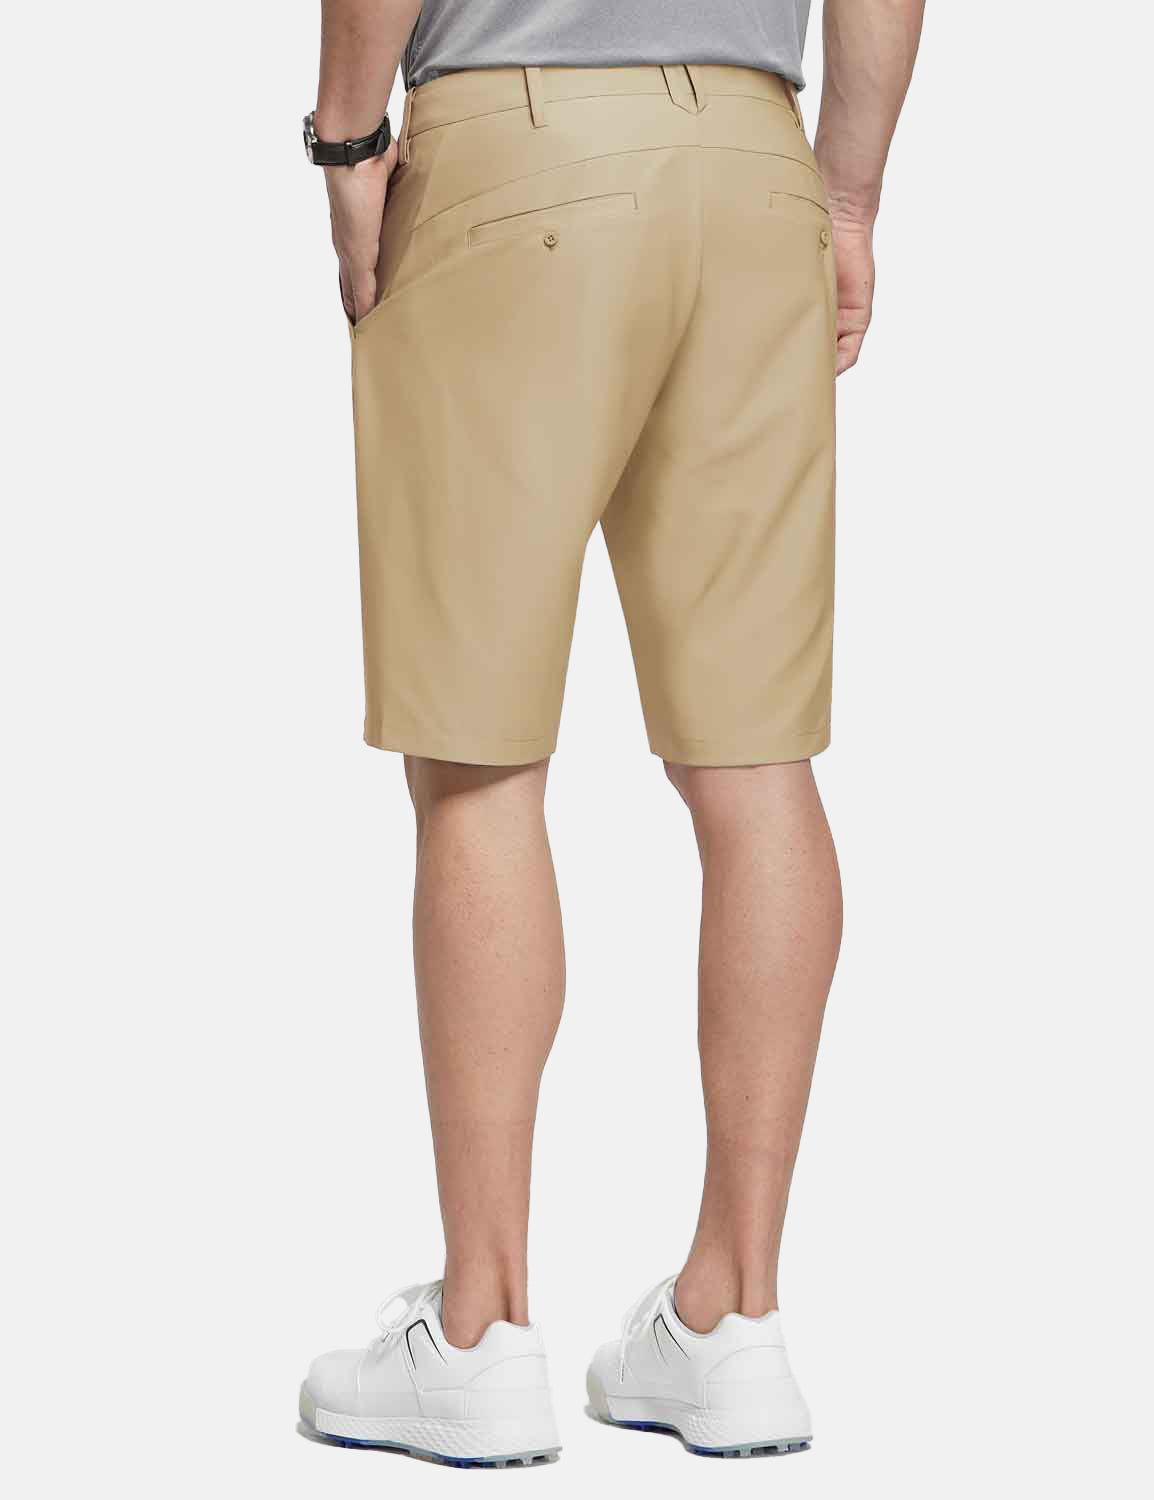 Baleaf Men's 10' UPF 50+ Lightweight Golf Shorts w Zipper Pockets cga005 Khaki Back